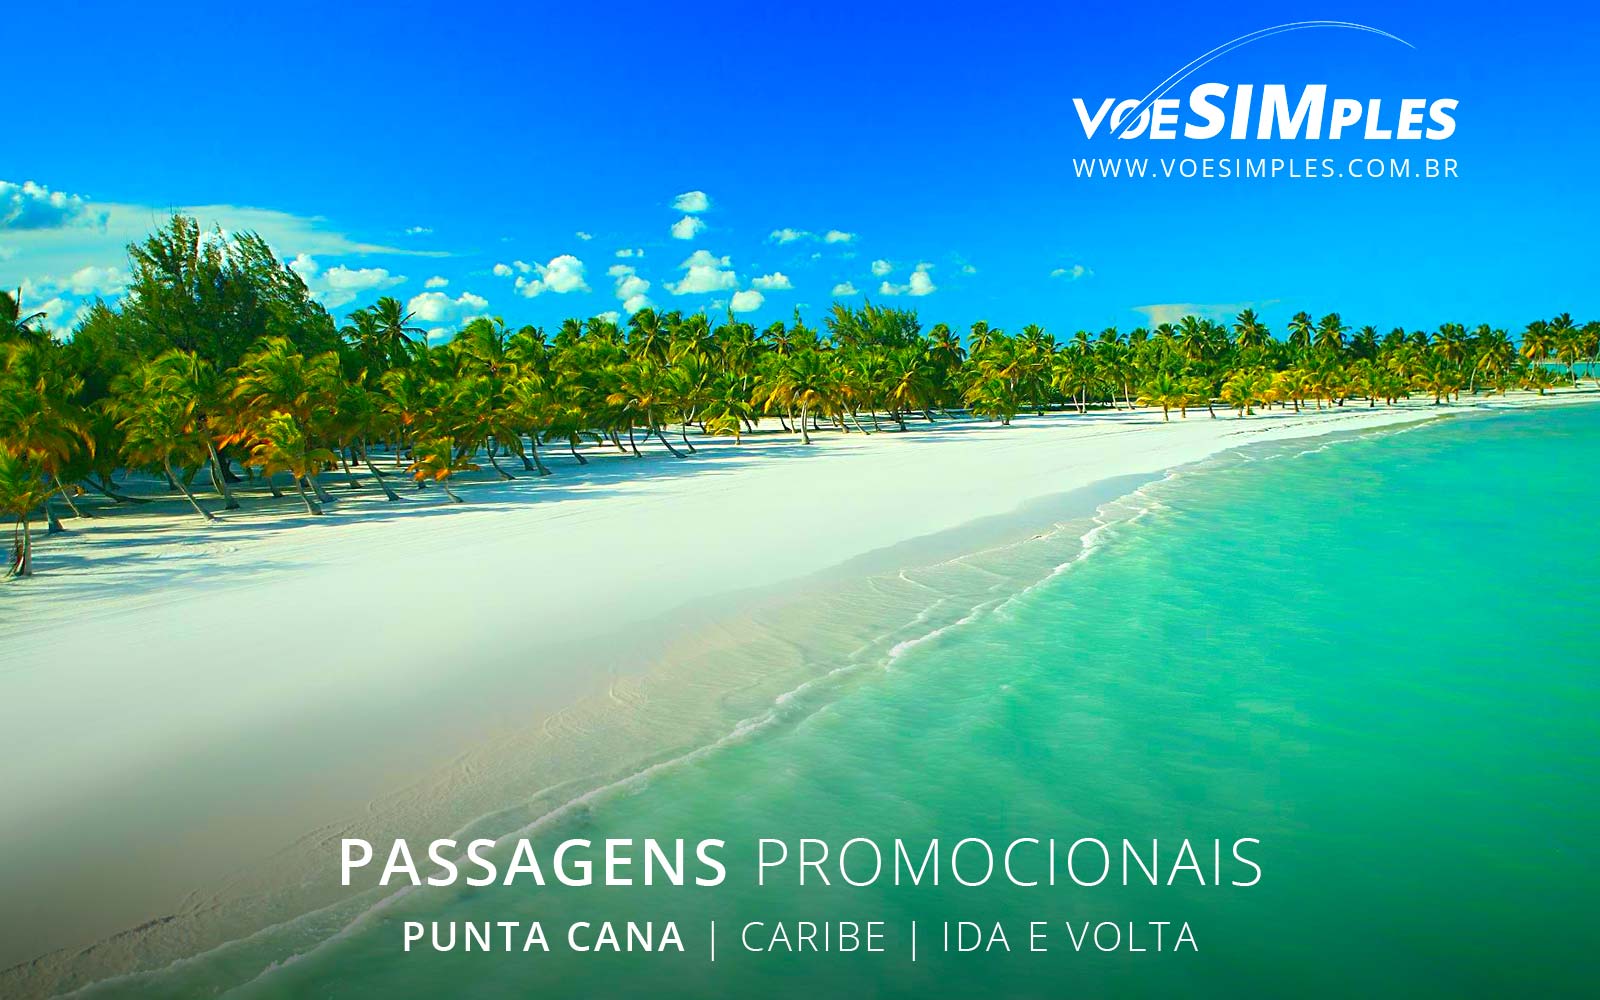 passagens-aereas-baratas-punta-cana-rapublica-dominicana-caribe-voe-simples-passages-aereas-promocionais-rapublica-dominicana-passagens-promo-punta-cana